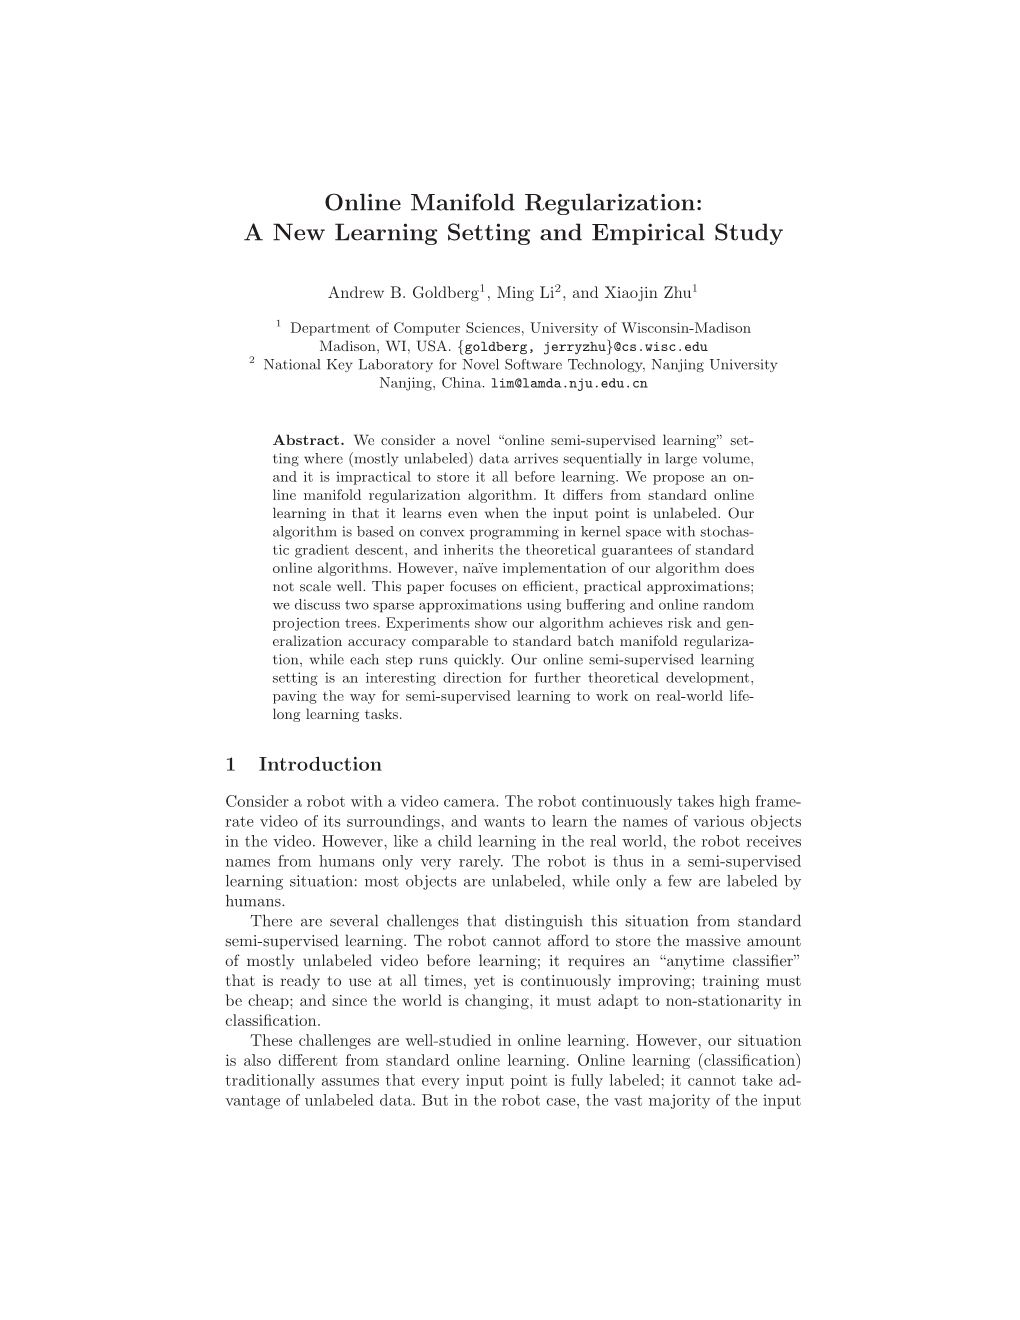 Online Manifold Regularization: a New Learning Setting and Empirical Study